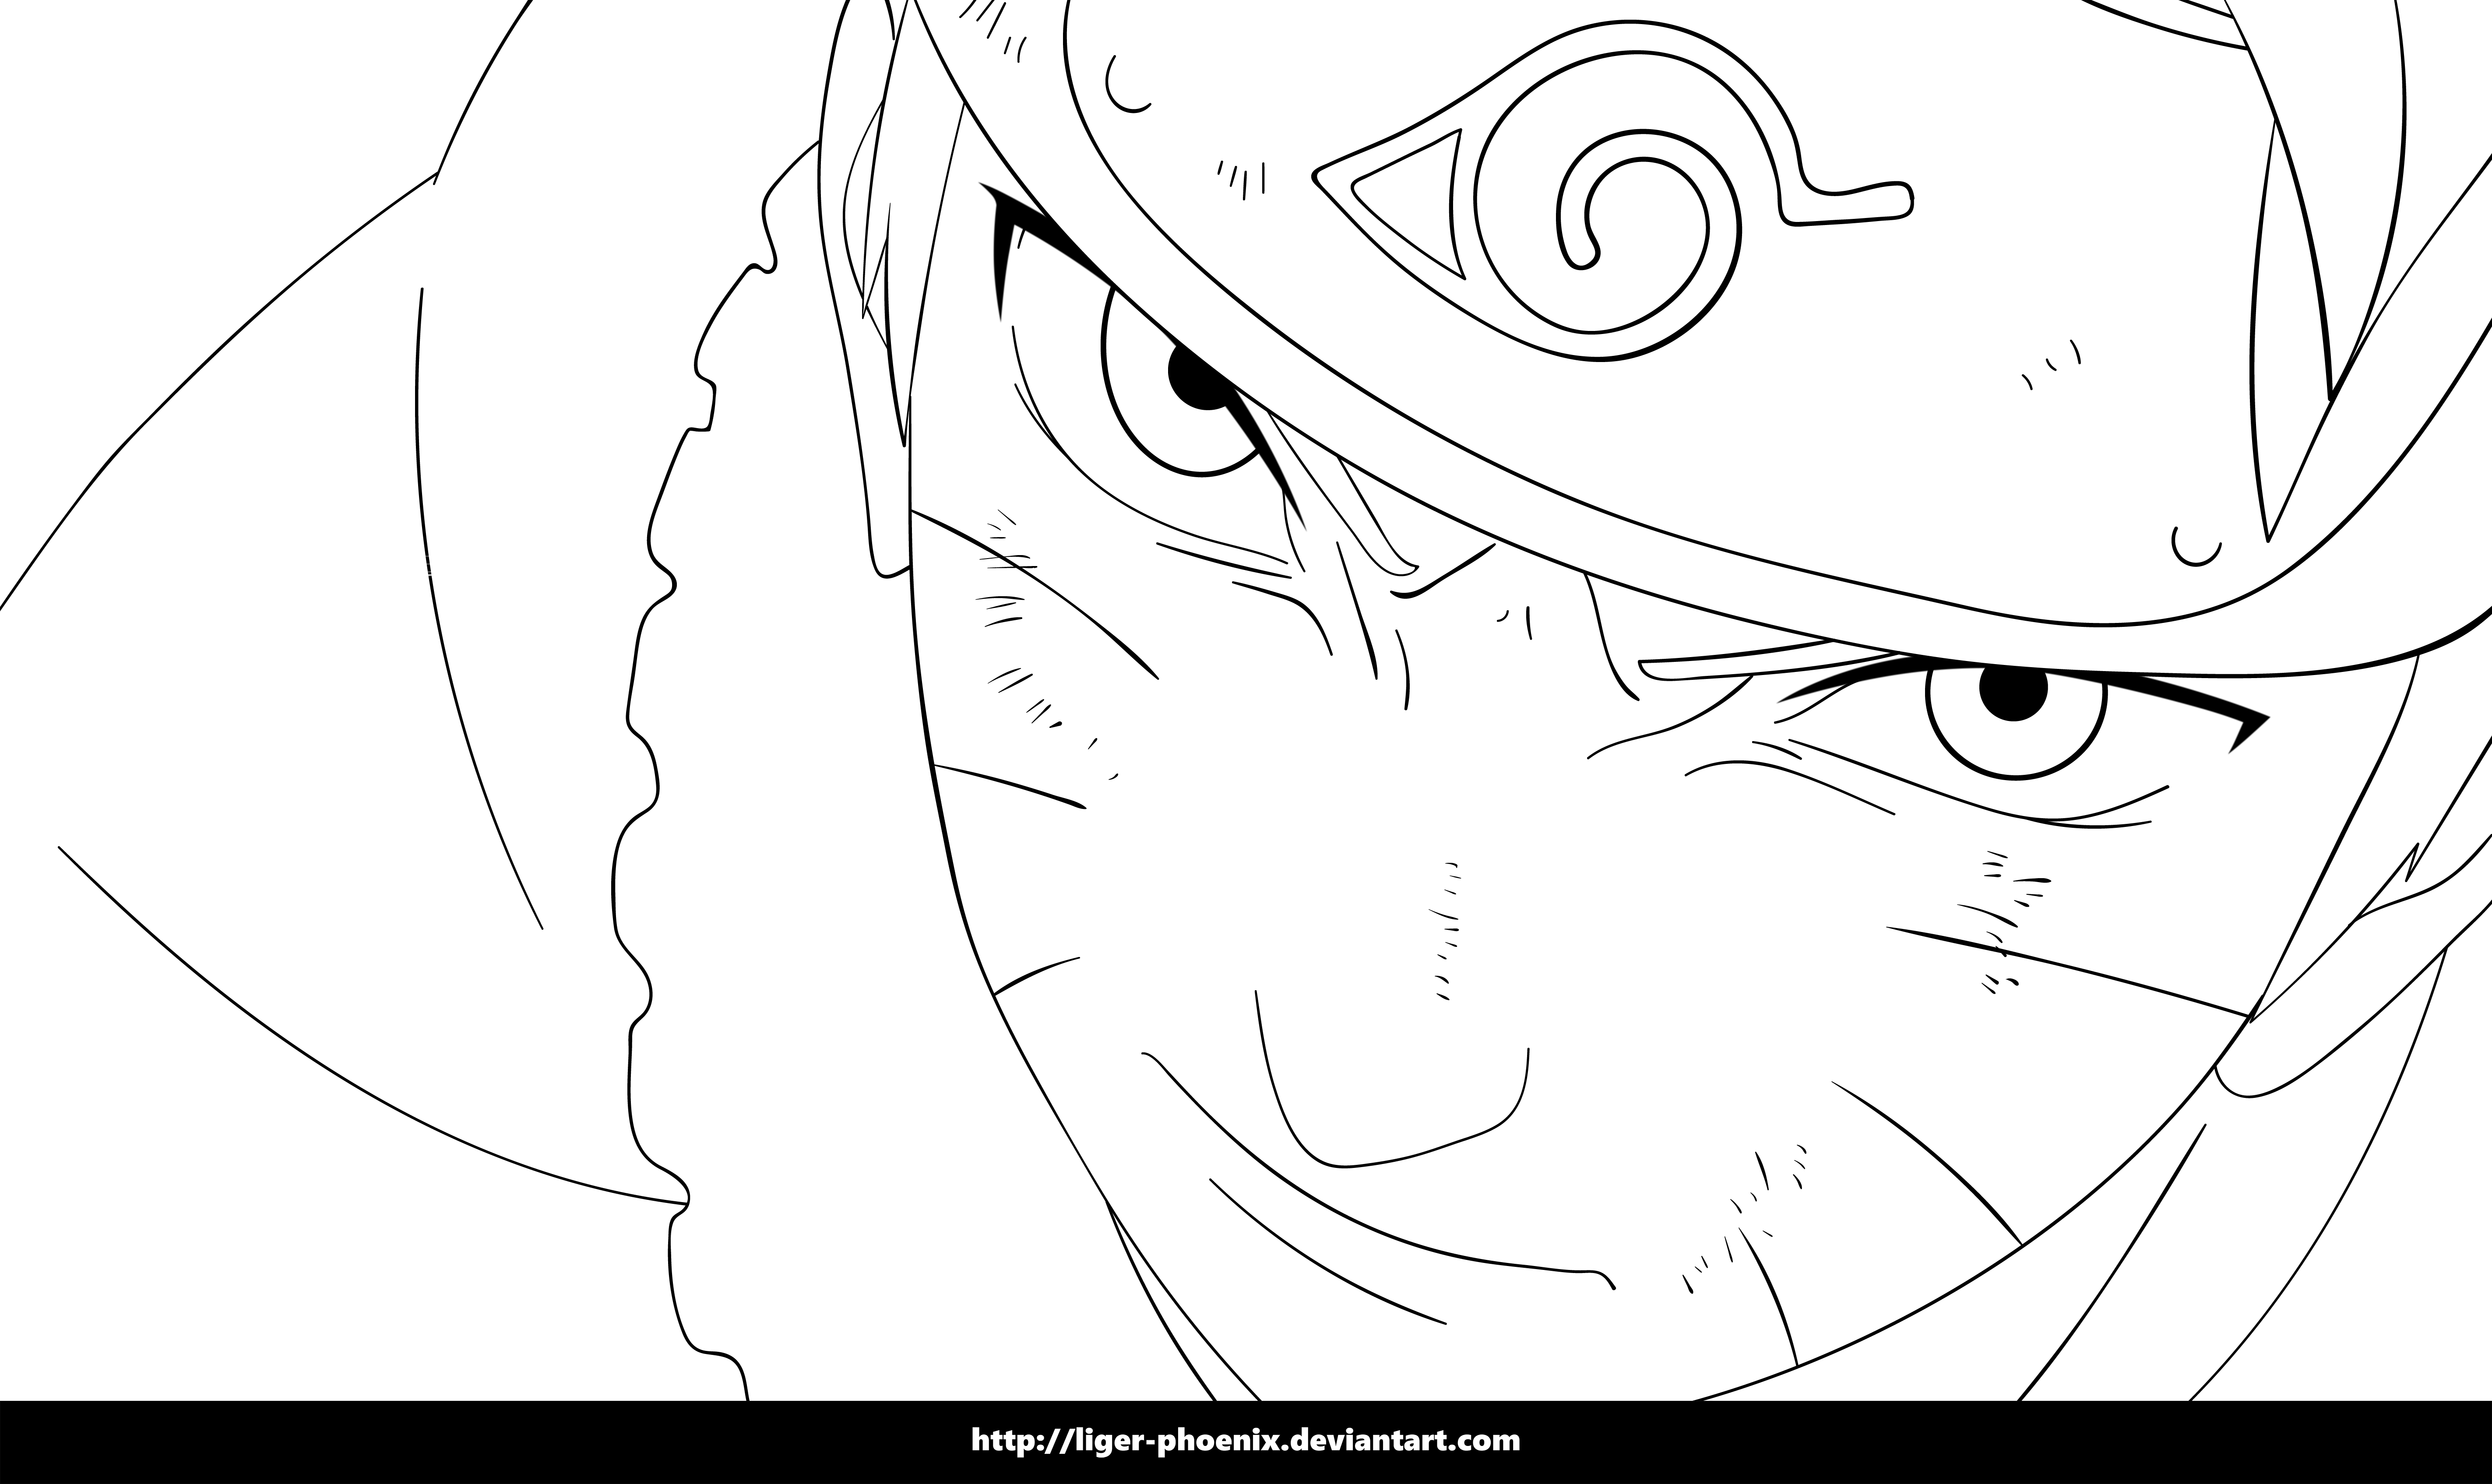 Video] Naruto - Naruto Uzumaki by LeisaigeArts on DeviantArt